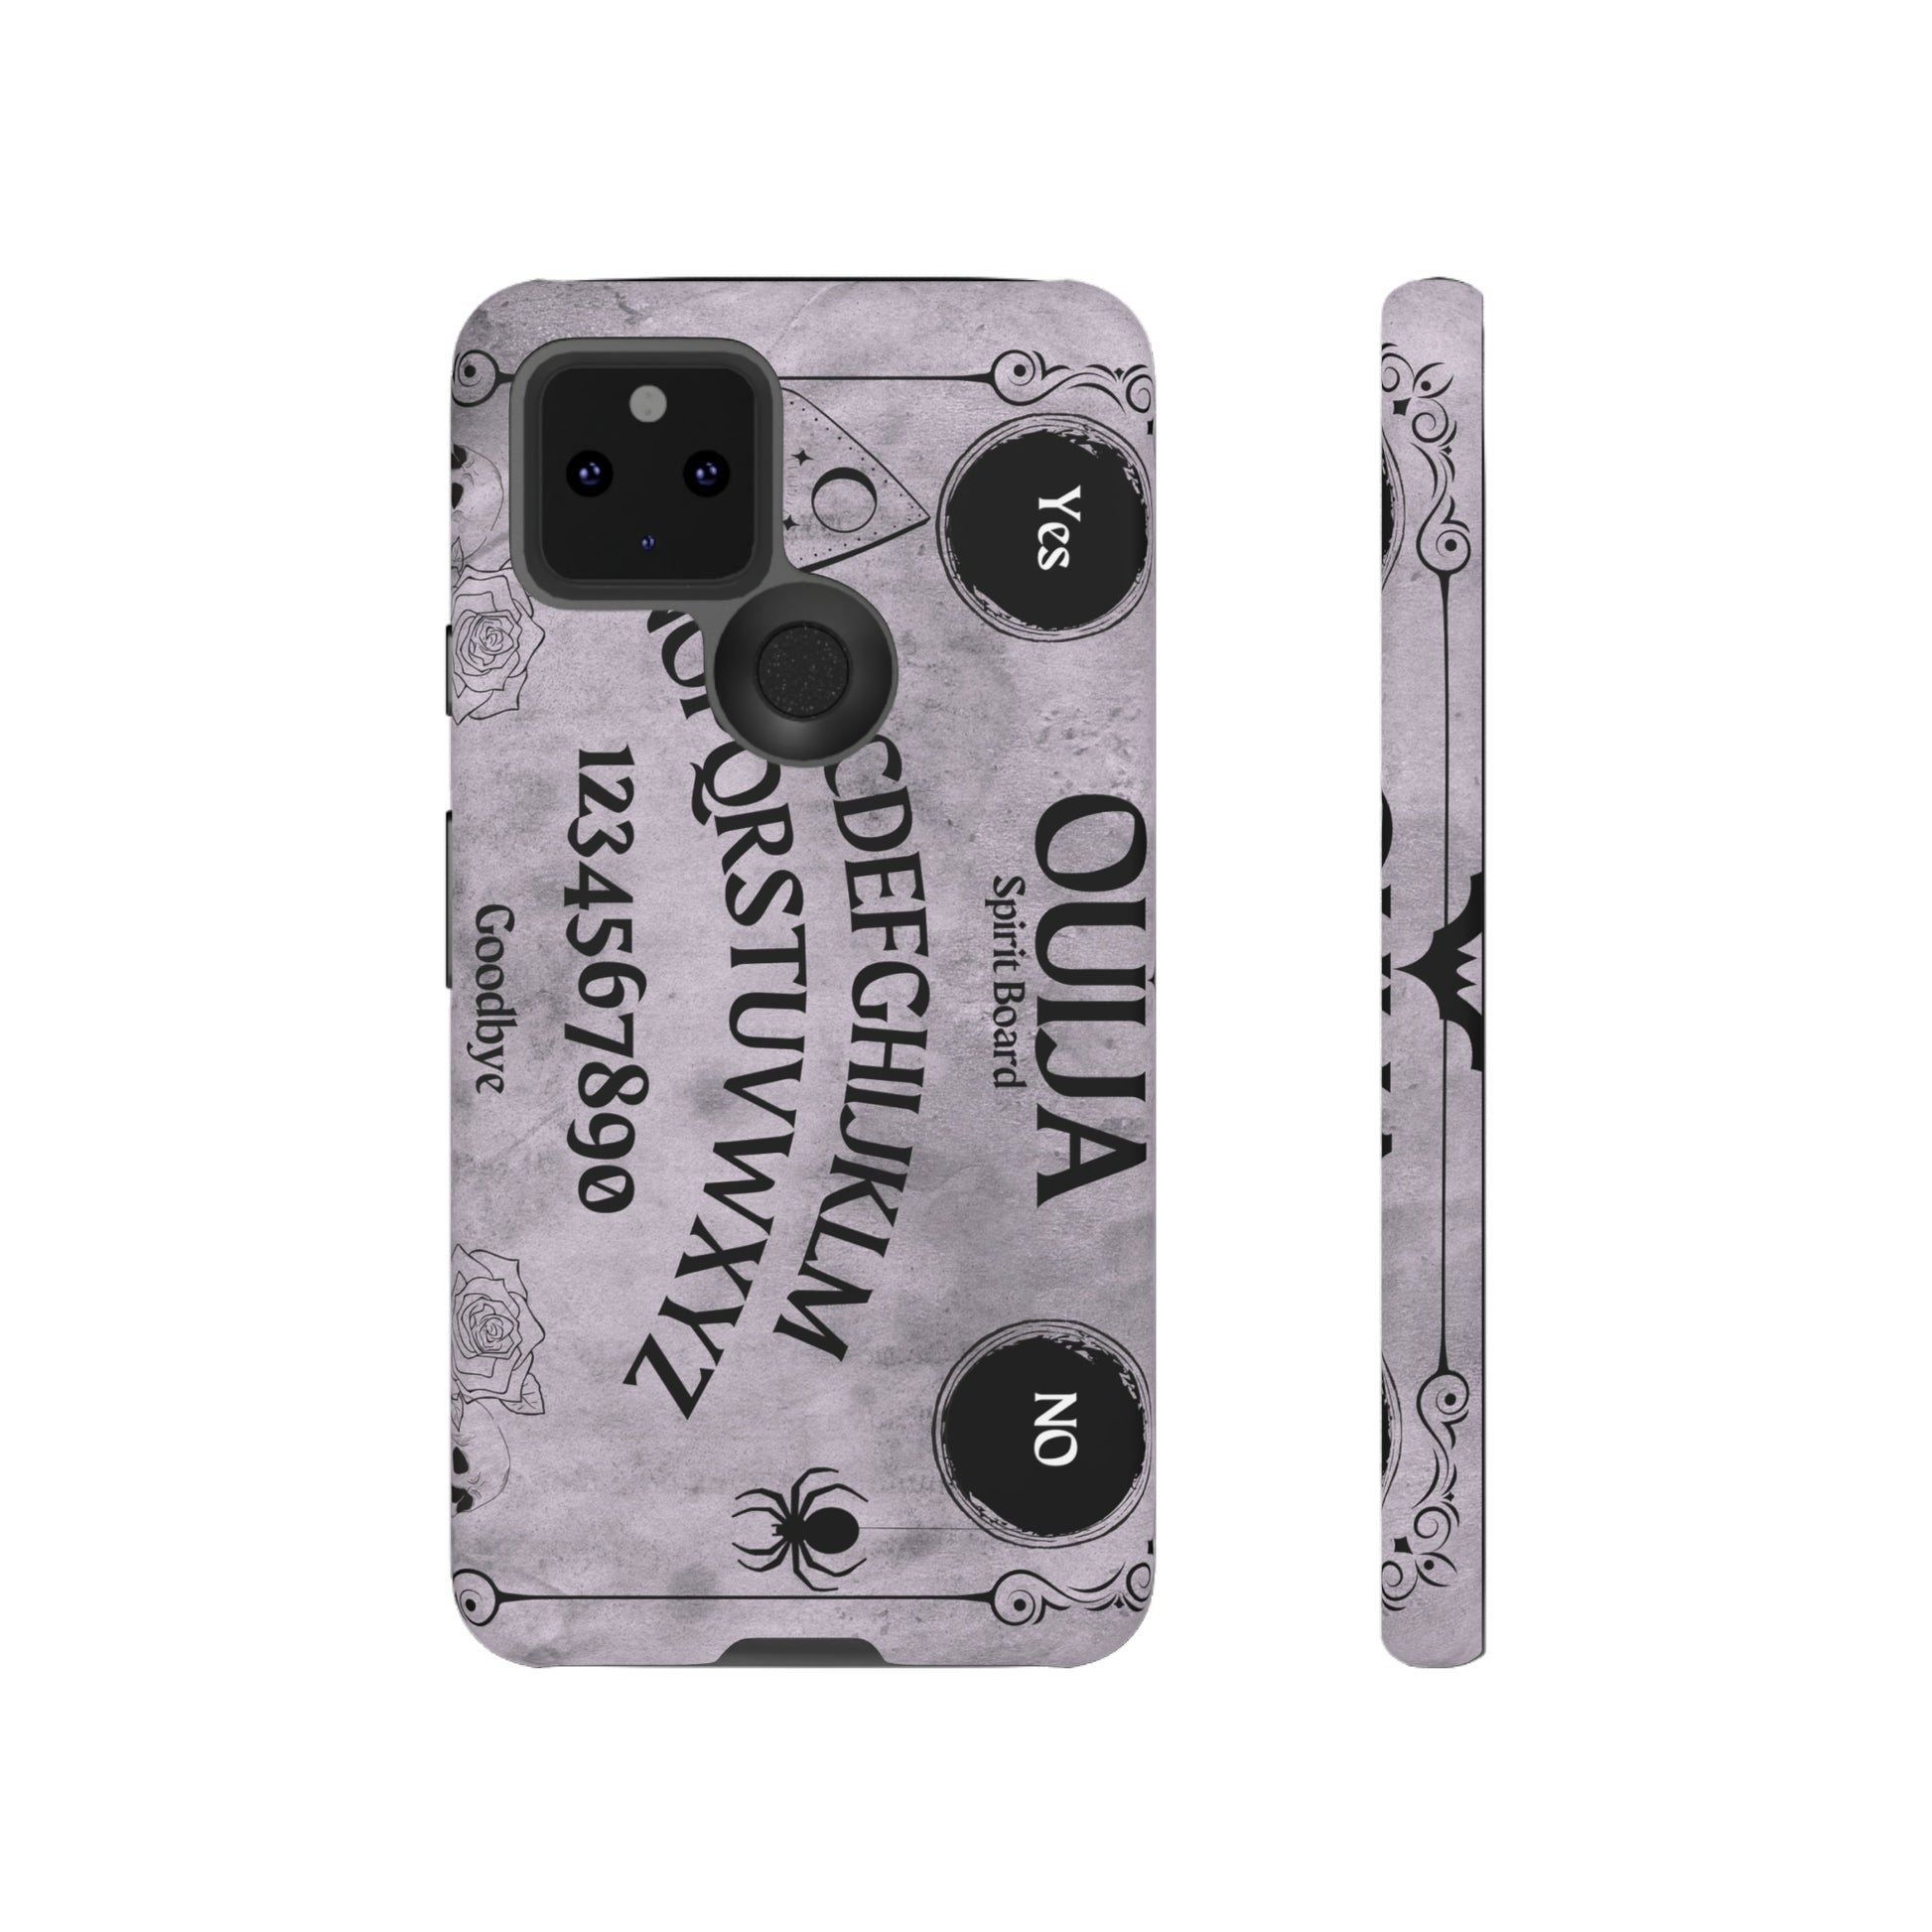 Ouija Board Tough Phone Cases For Samsung iPhone GooglePhone CaseVTZdesignsGoogle Pixel 5 5GMatteAccessoriesGlossyhalloween